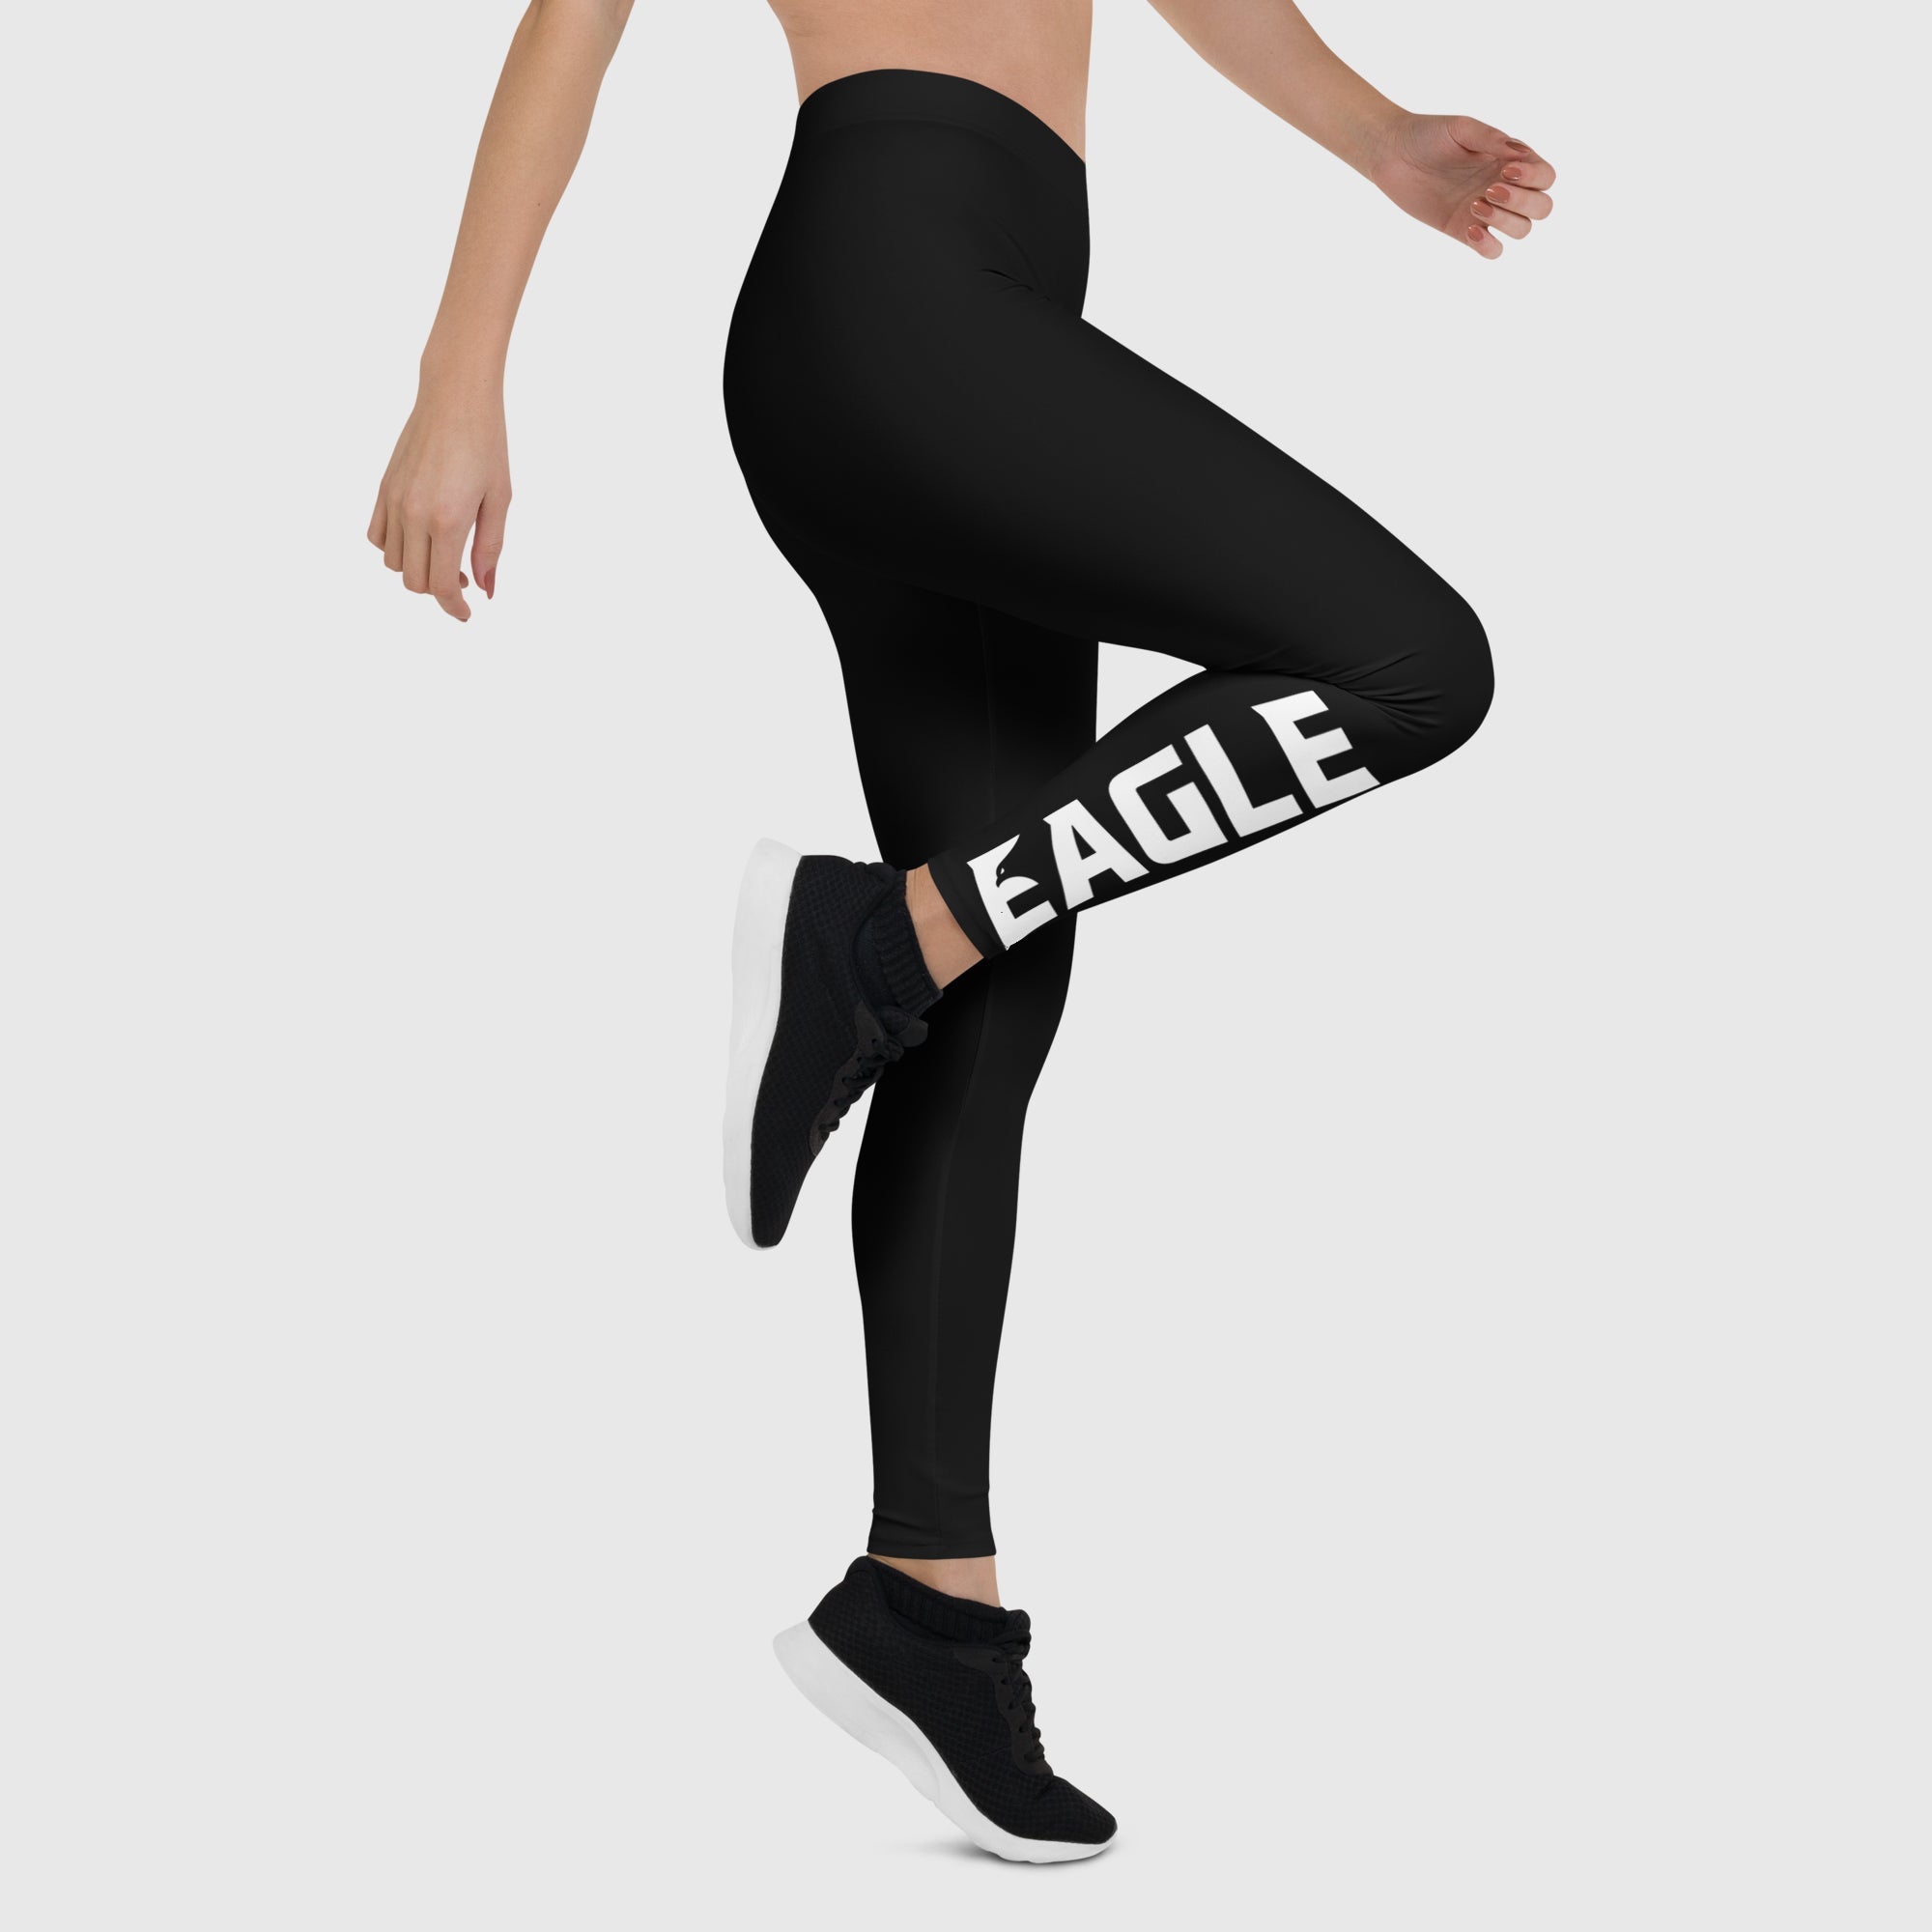 Eagle Leggings